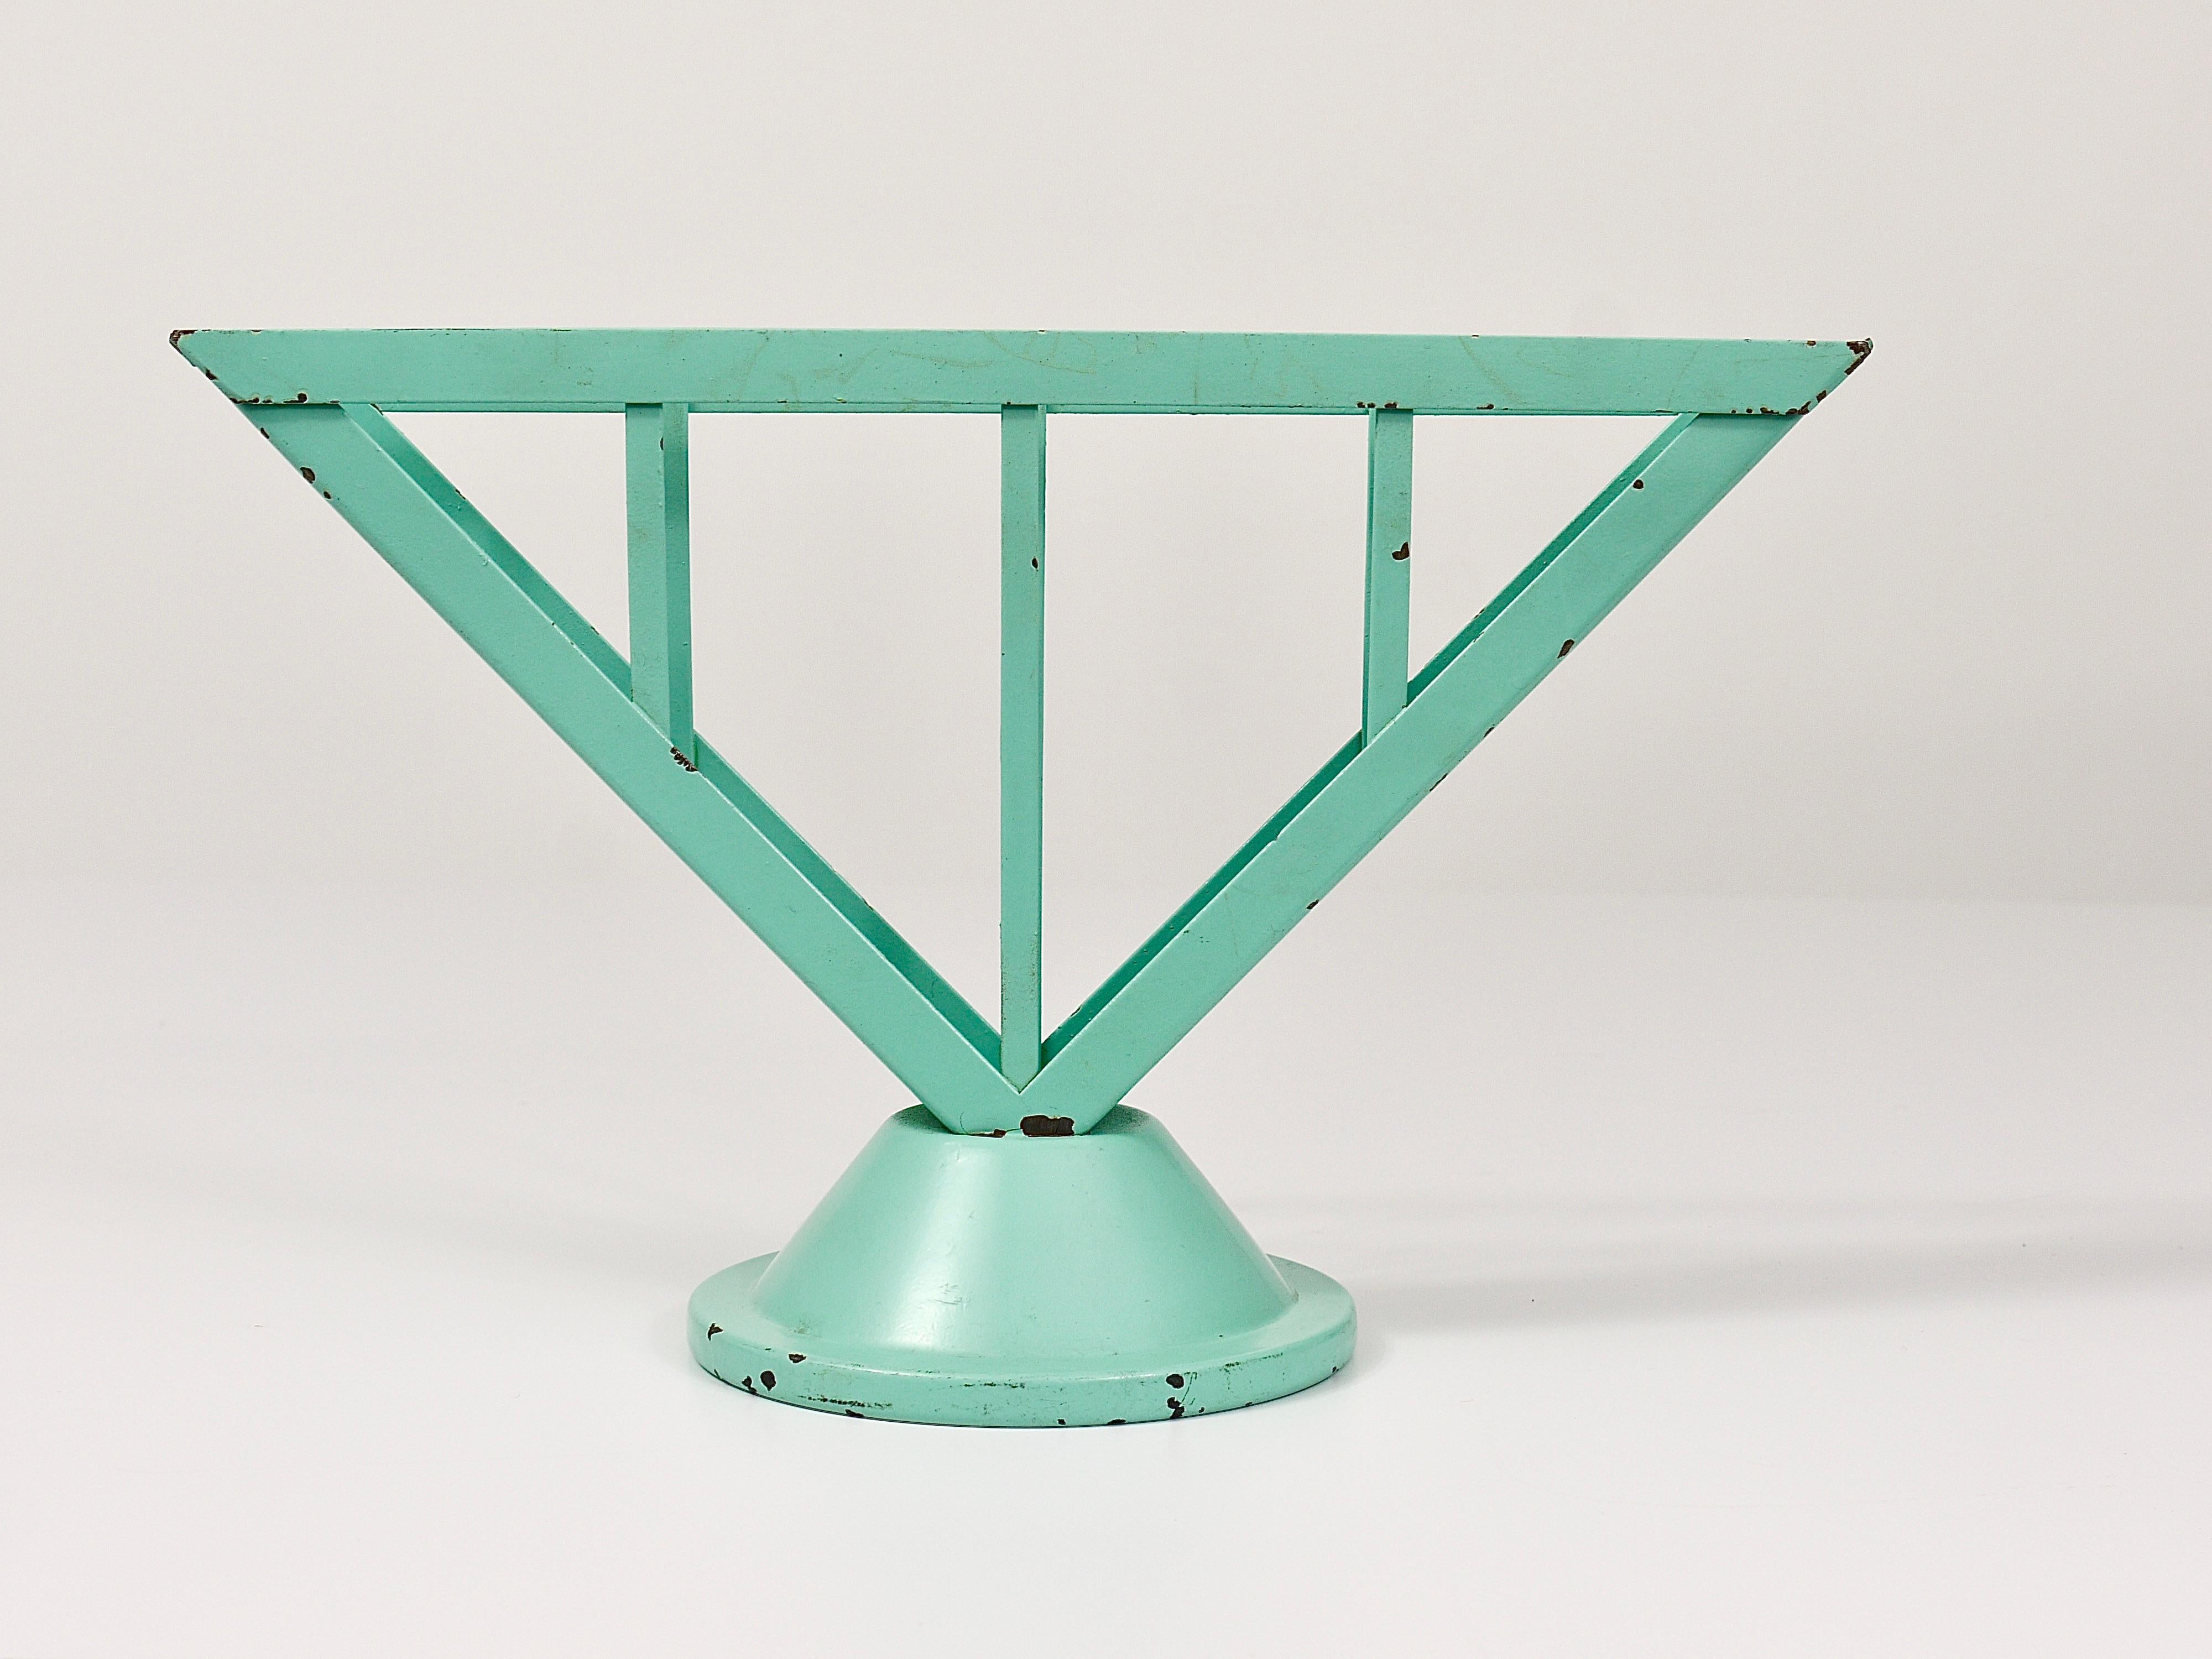 Metal Decorative Green Marianne Brandt Avantgarde Bauhaus Napkin Holder, Ruppel, 1930s For Sale